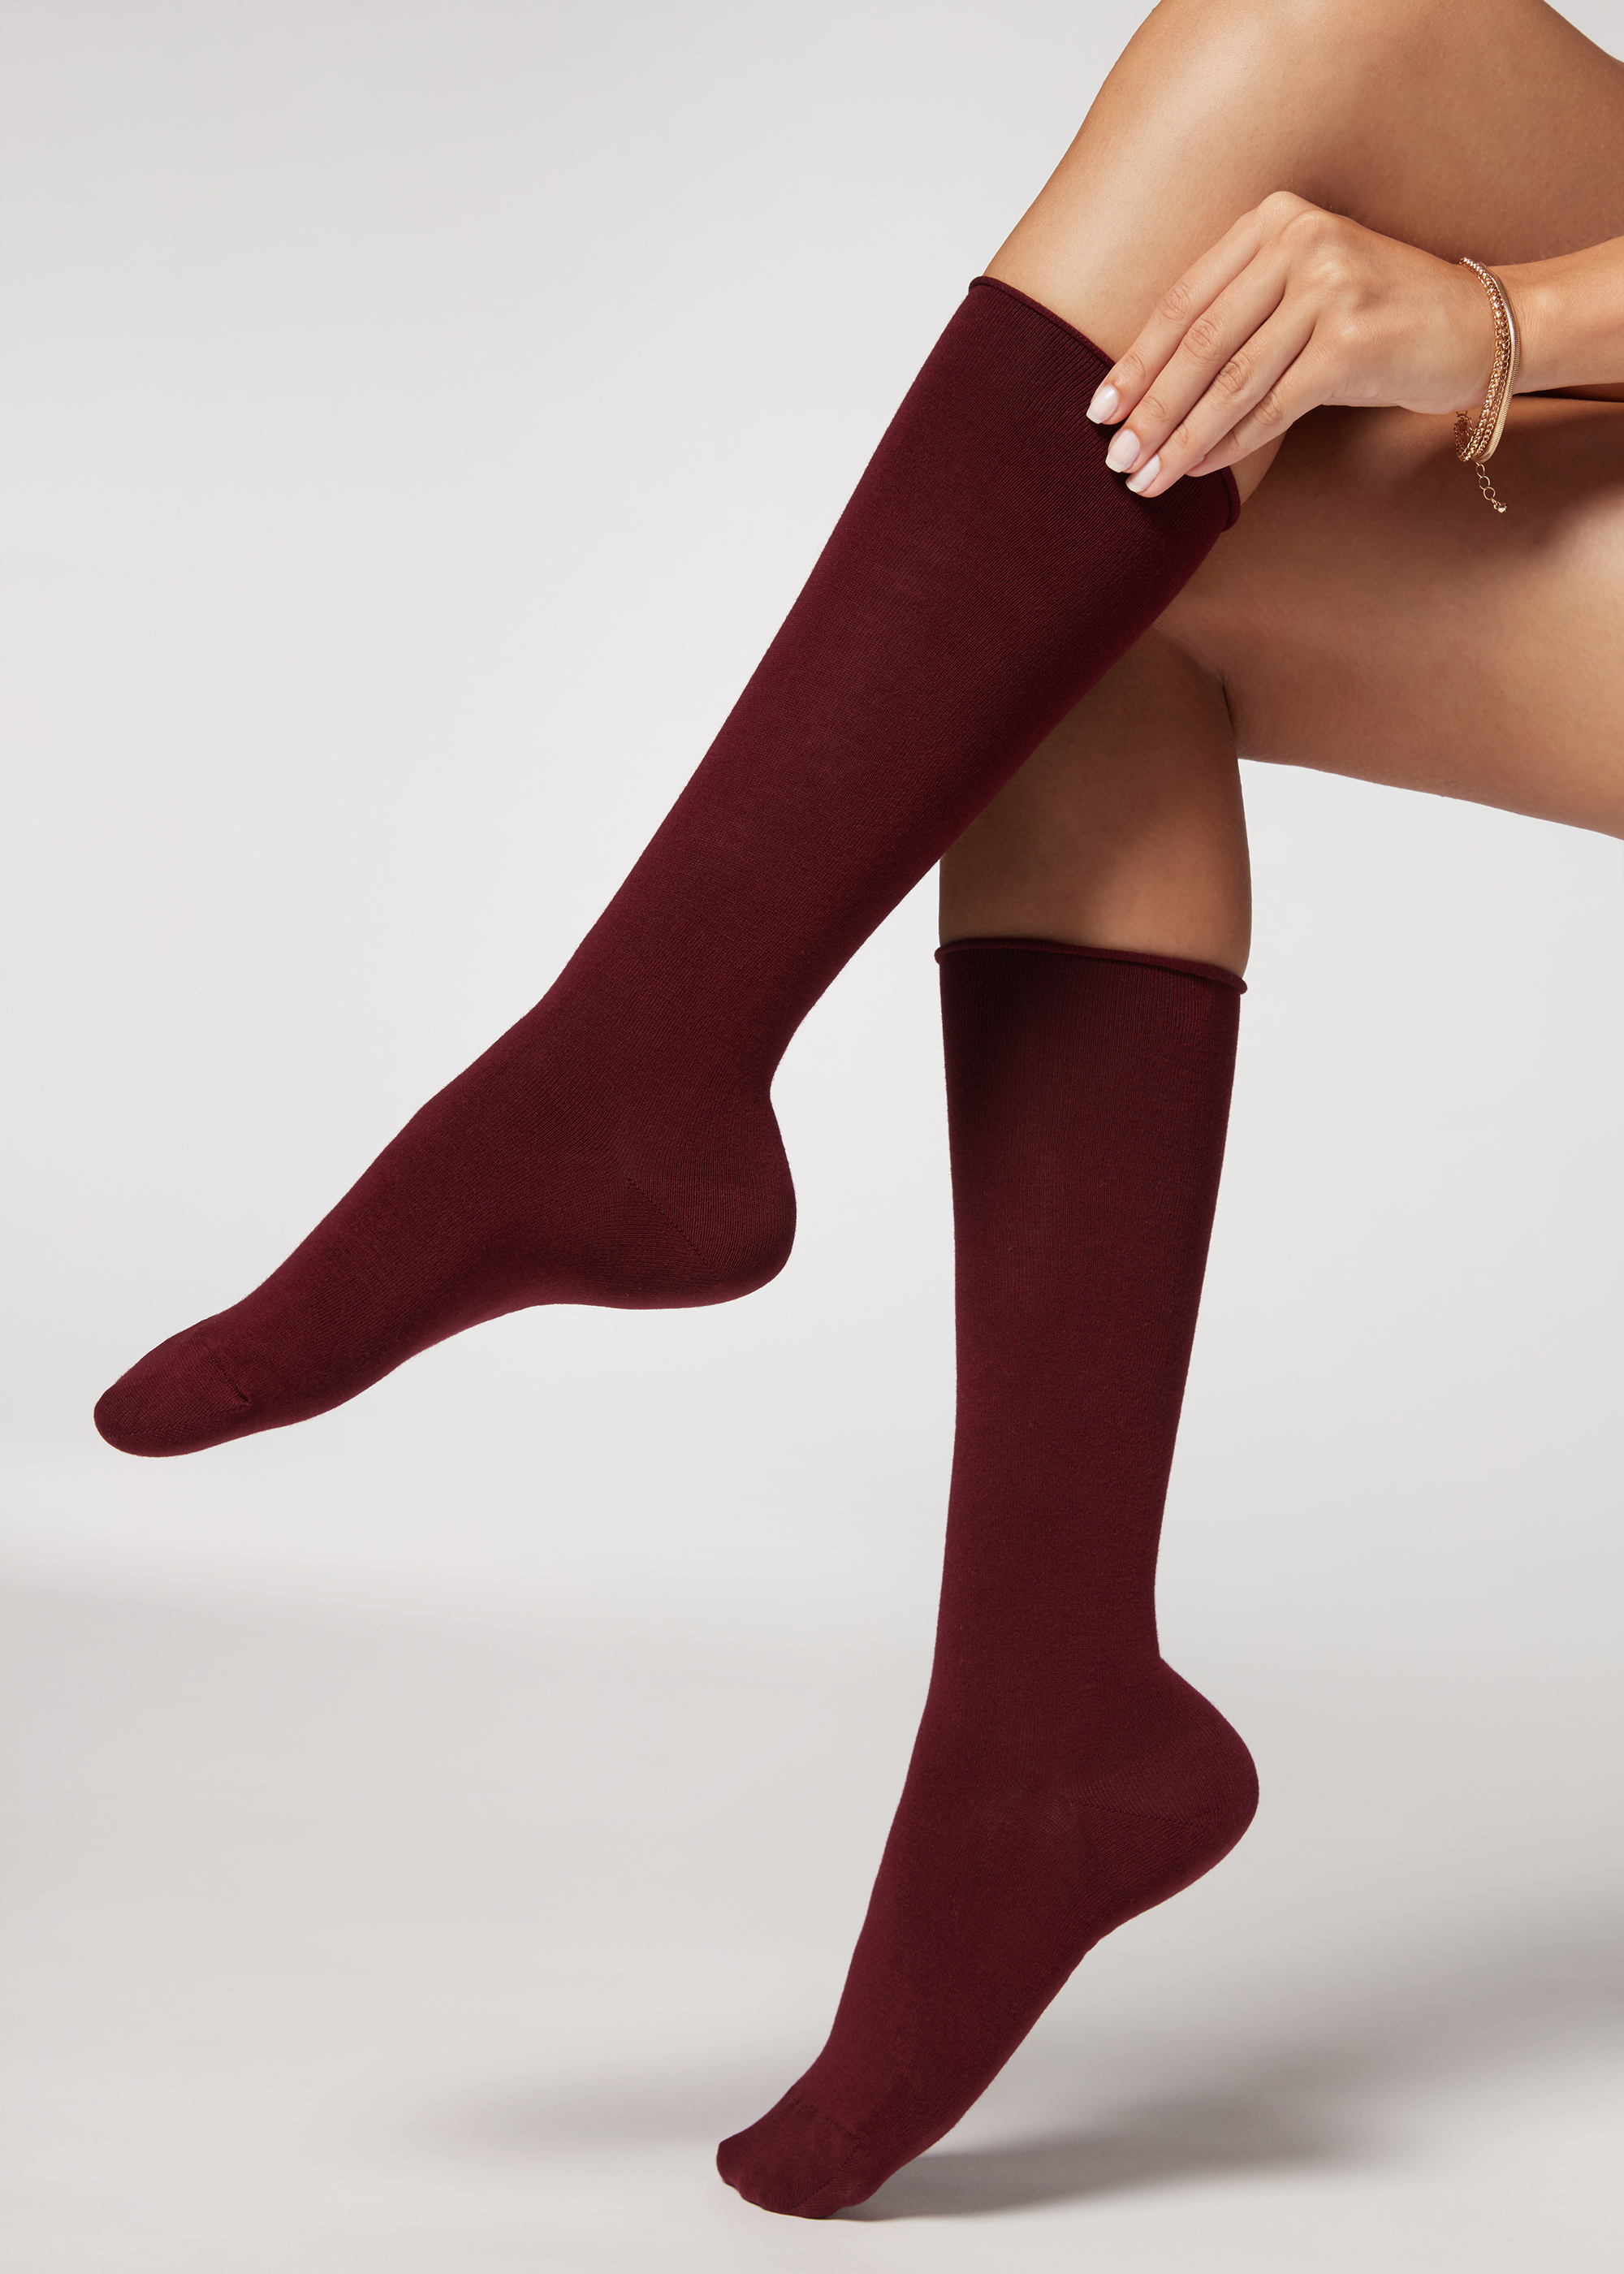 Metropolitan lexicon Shah Women's Smooth Cotton Mid-Calf Socks - Long socks - Calzedonia